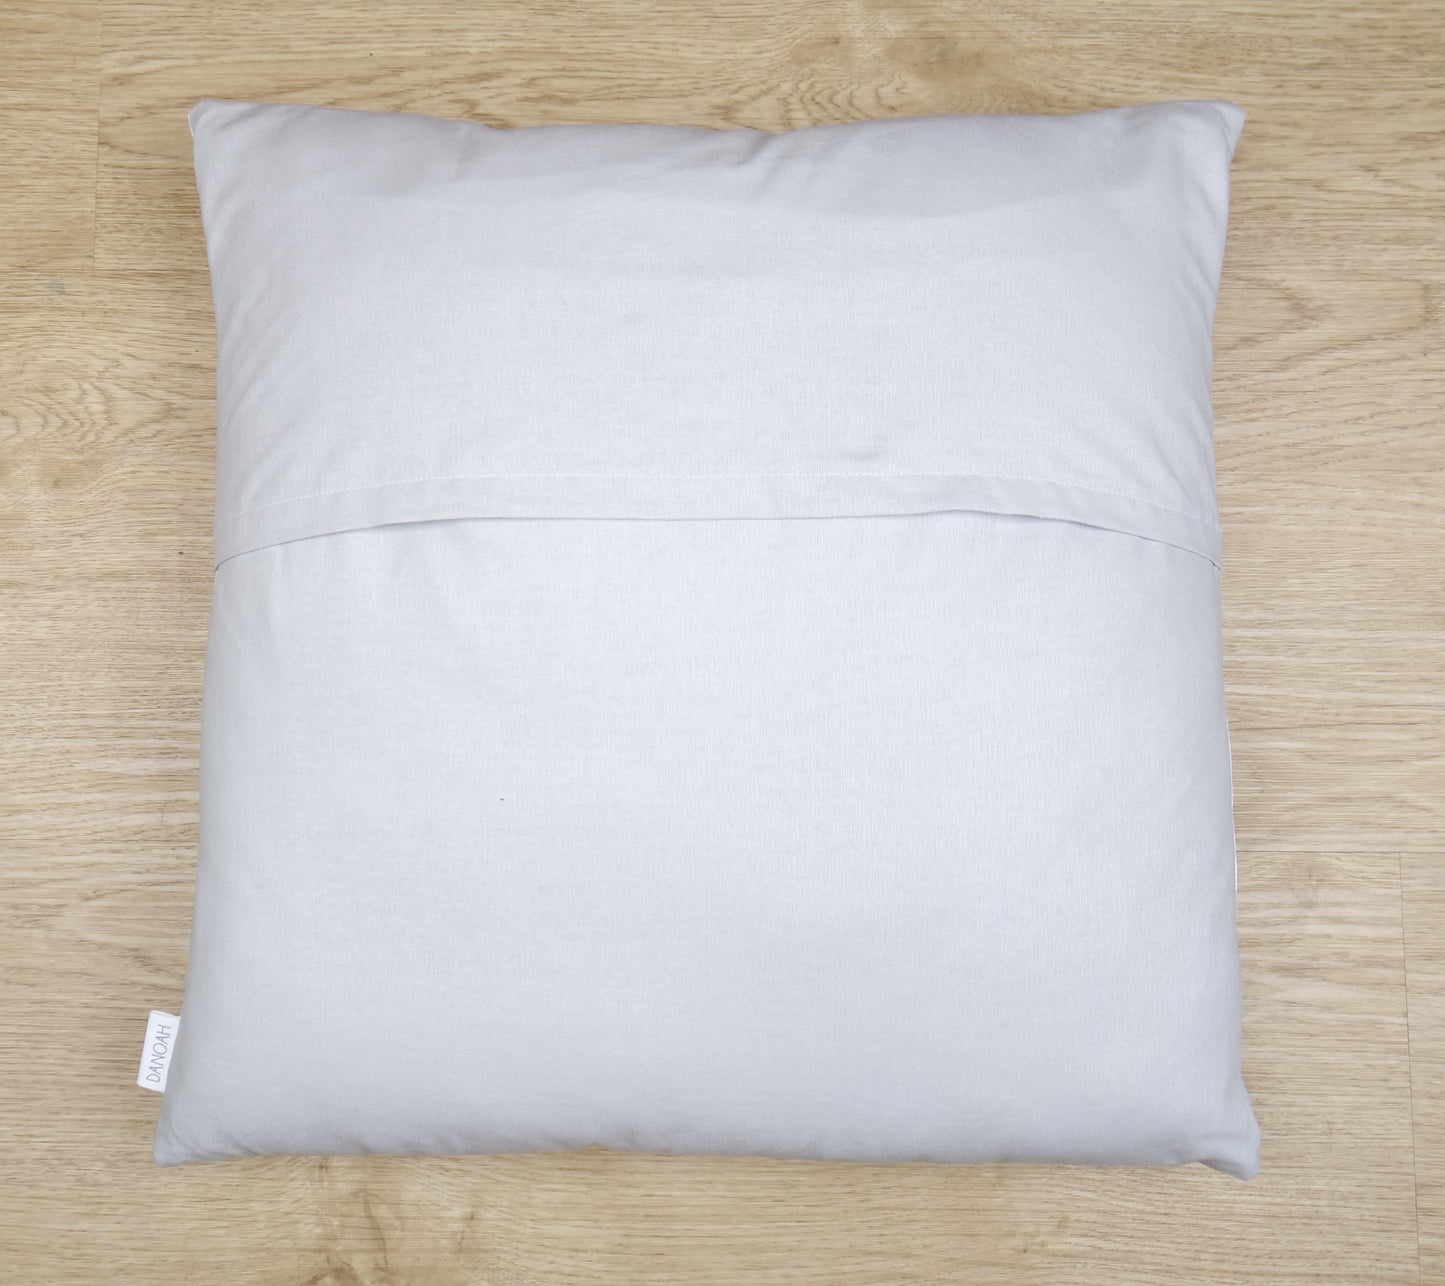 Grey & White Deer Head Cushion Cover